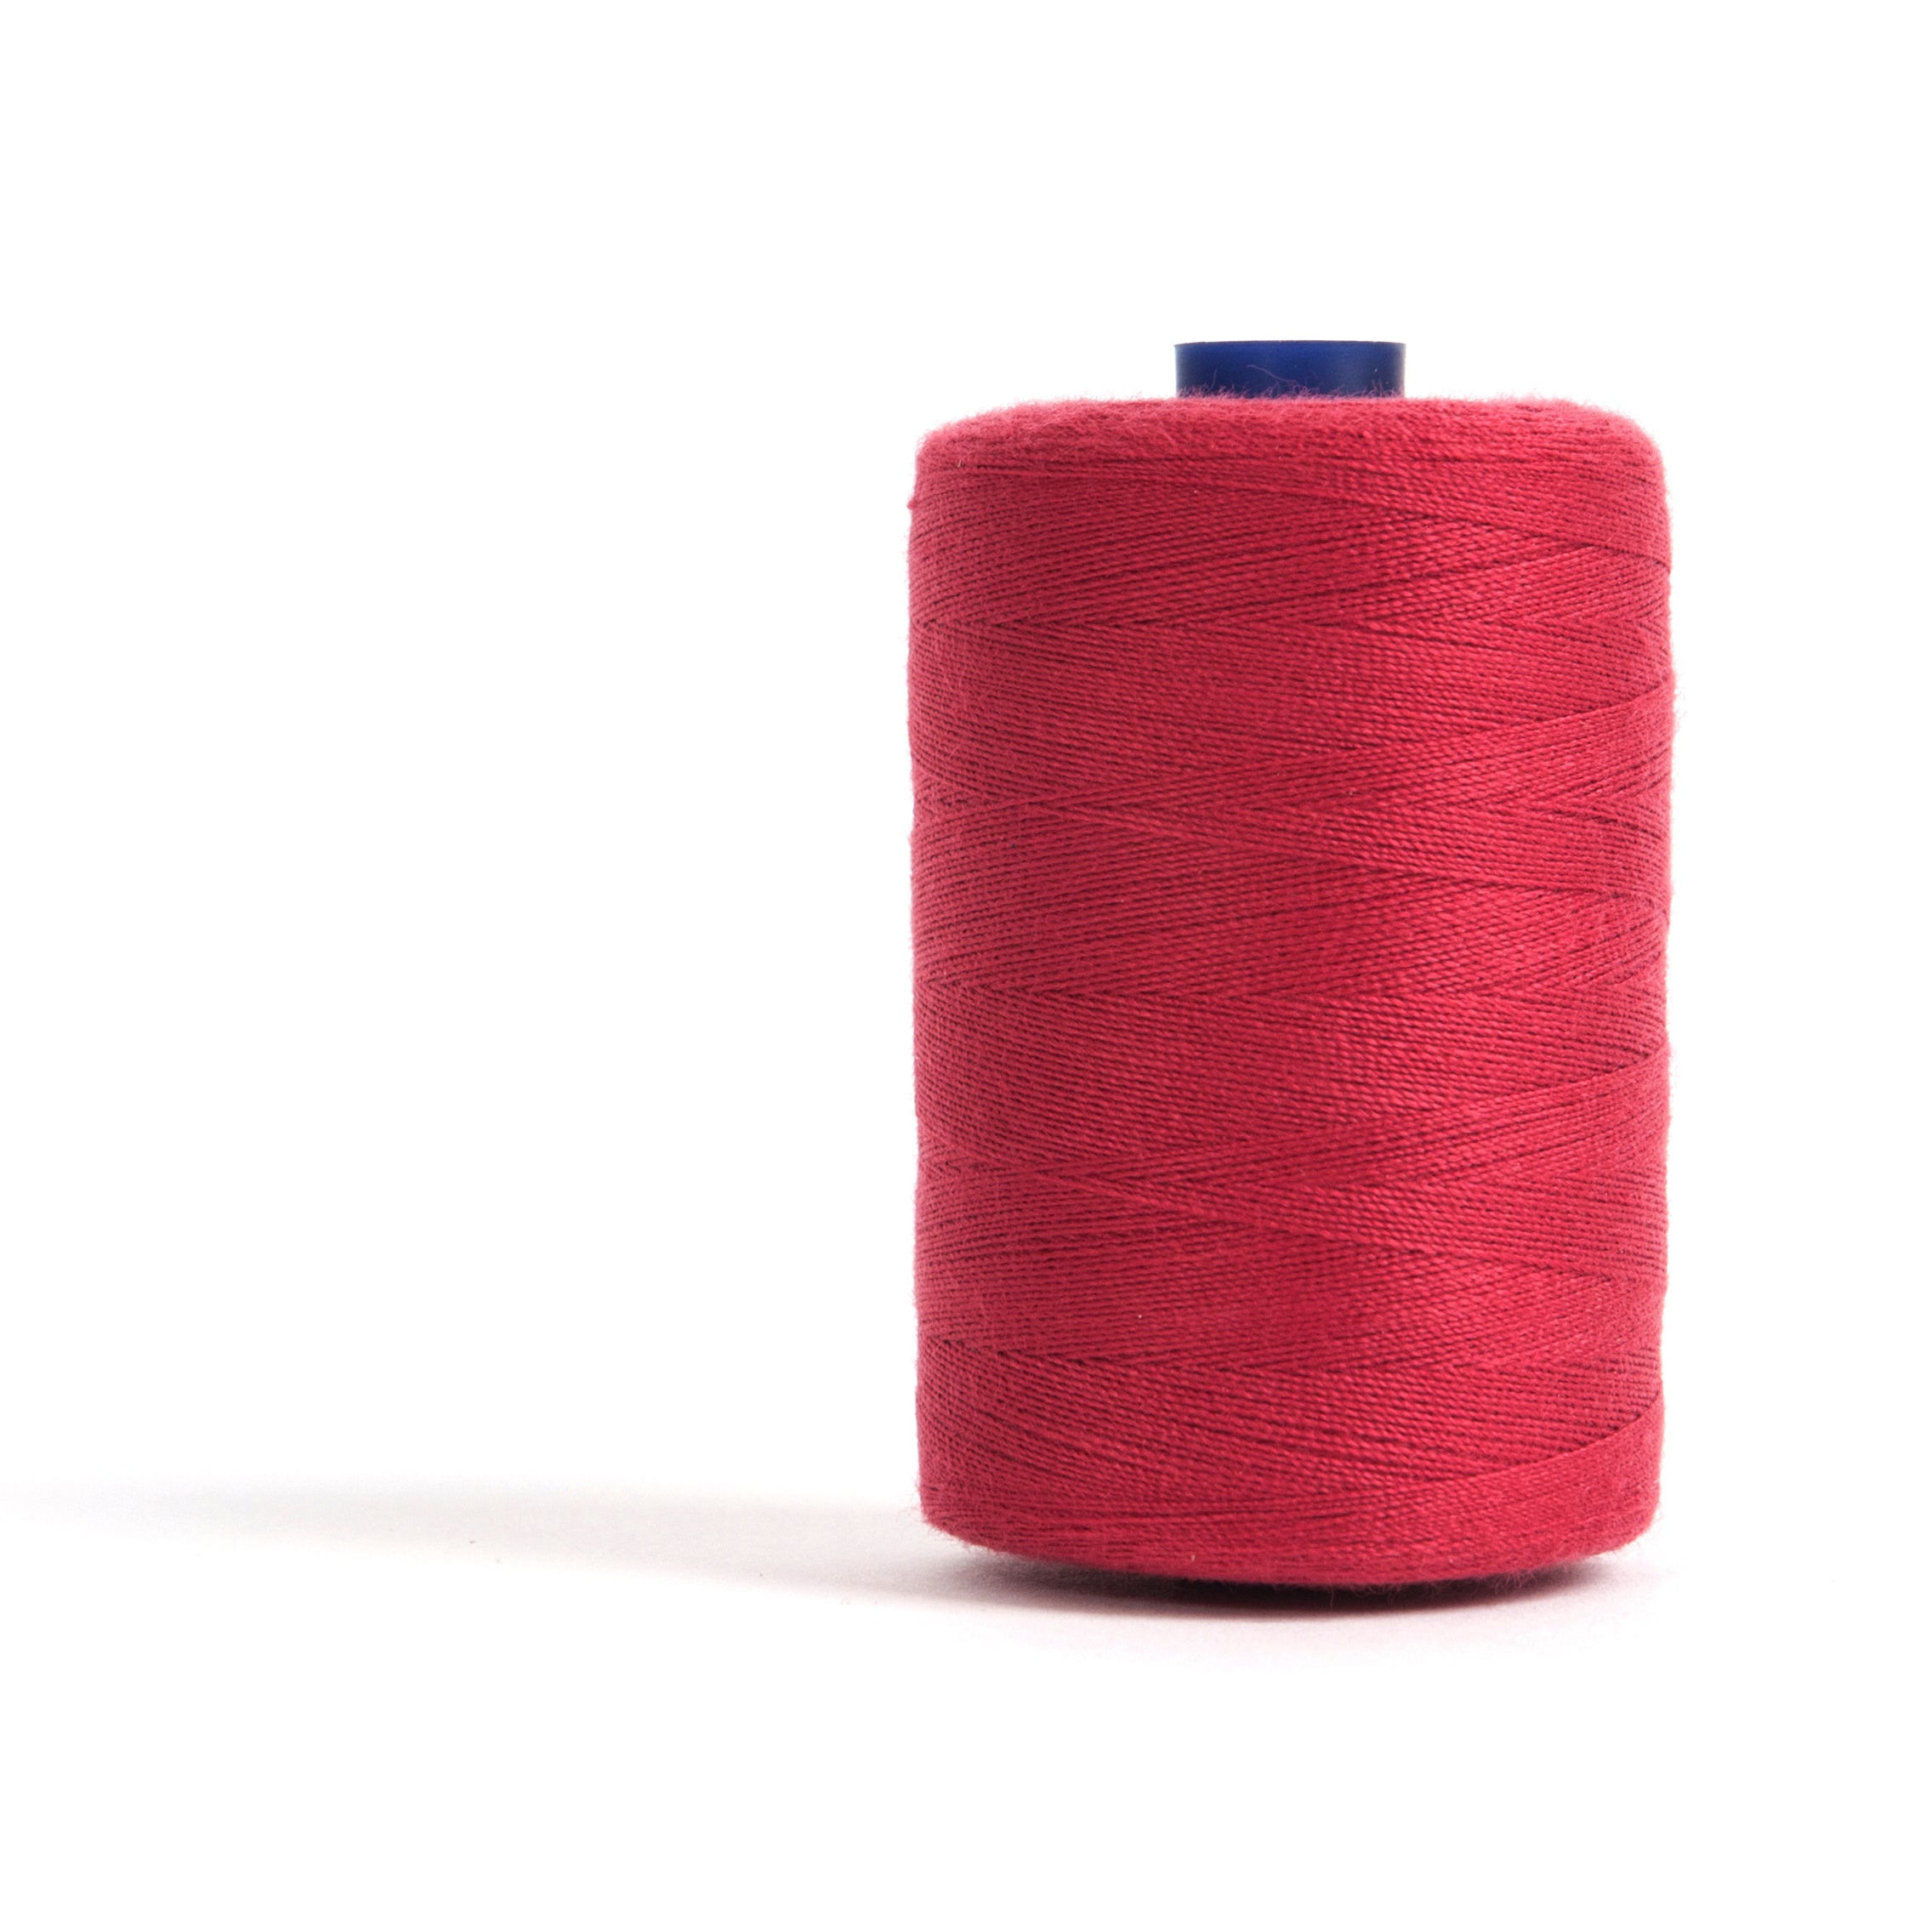 Hemline Sewing & Overlocking Thread - 1000m